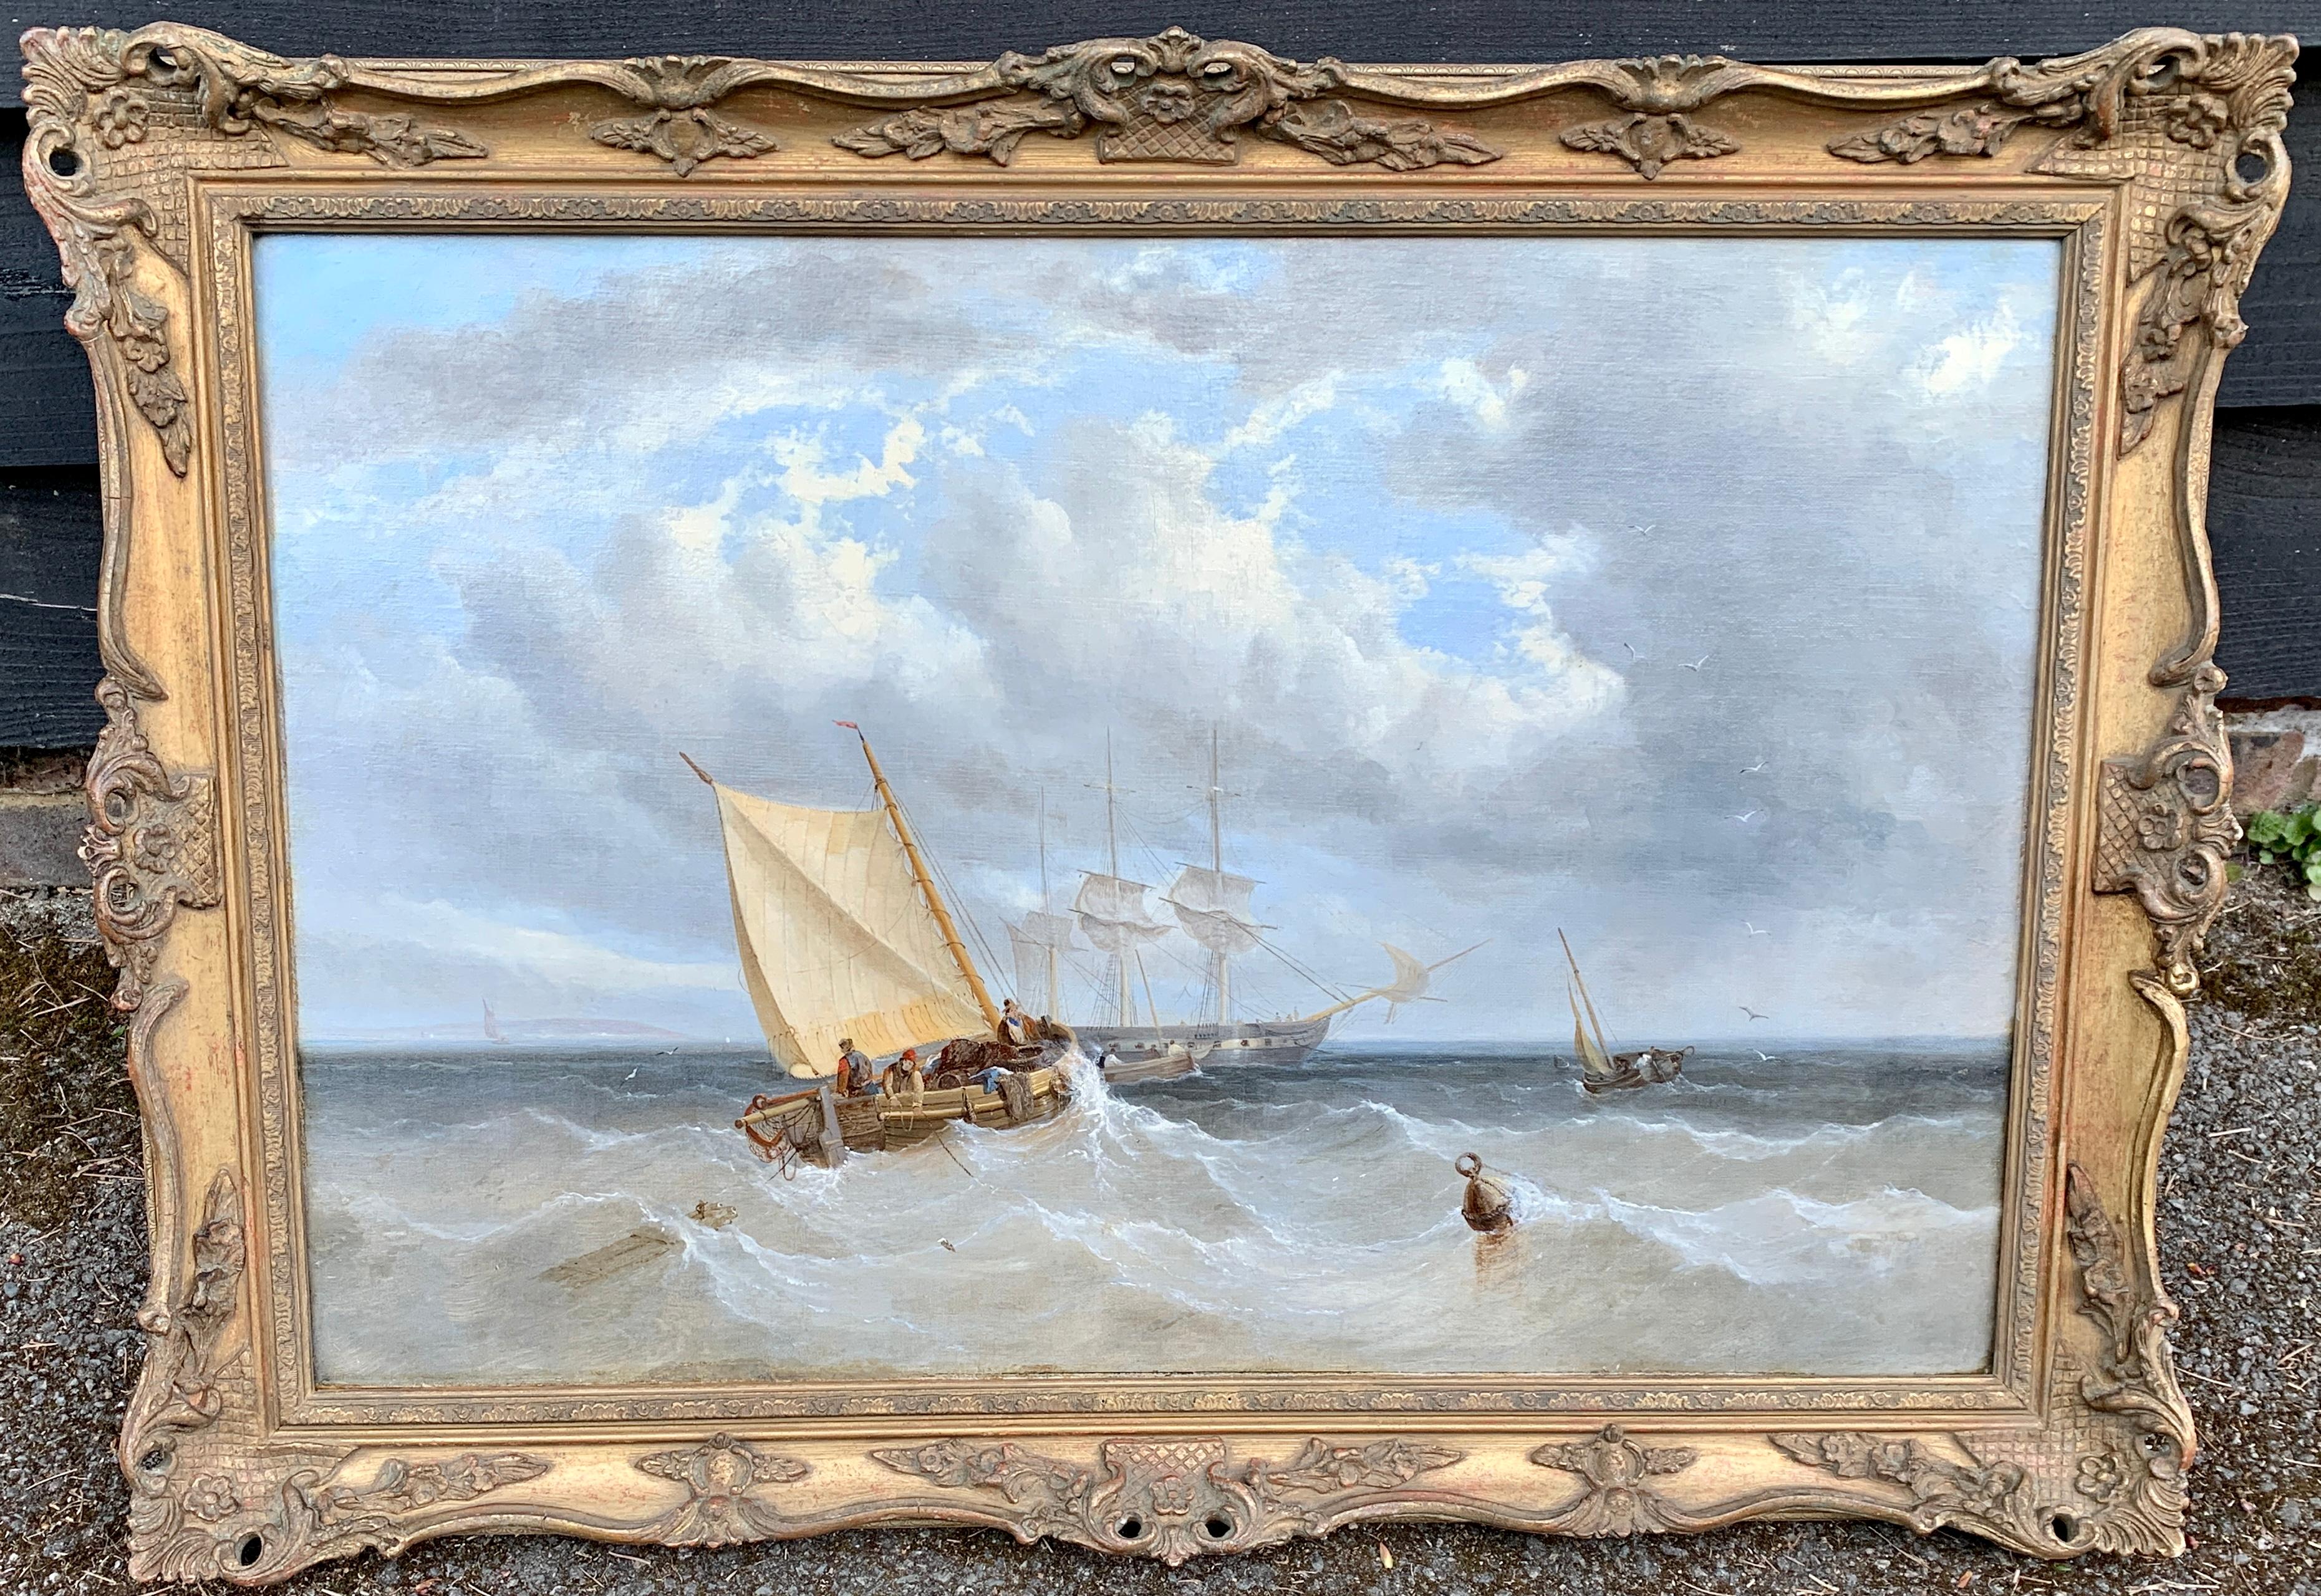 John Wilson Carmichael Figurative Painting - 19th century English oil, seascape with fishing boats off the English coast